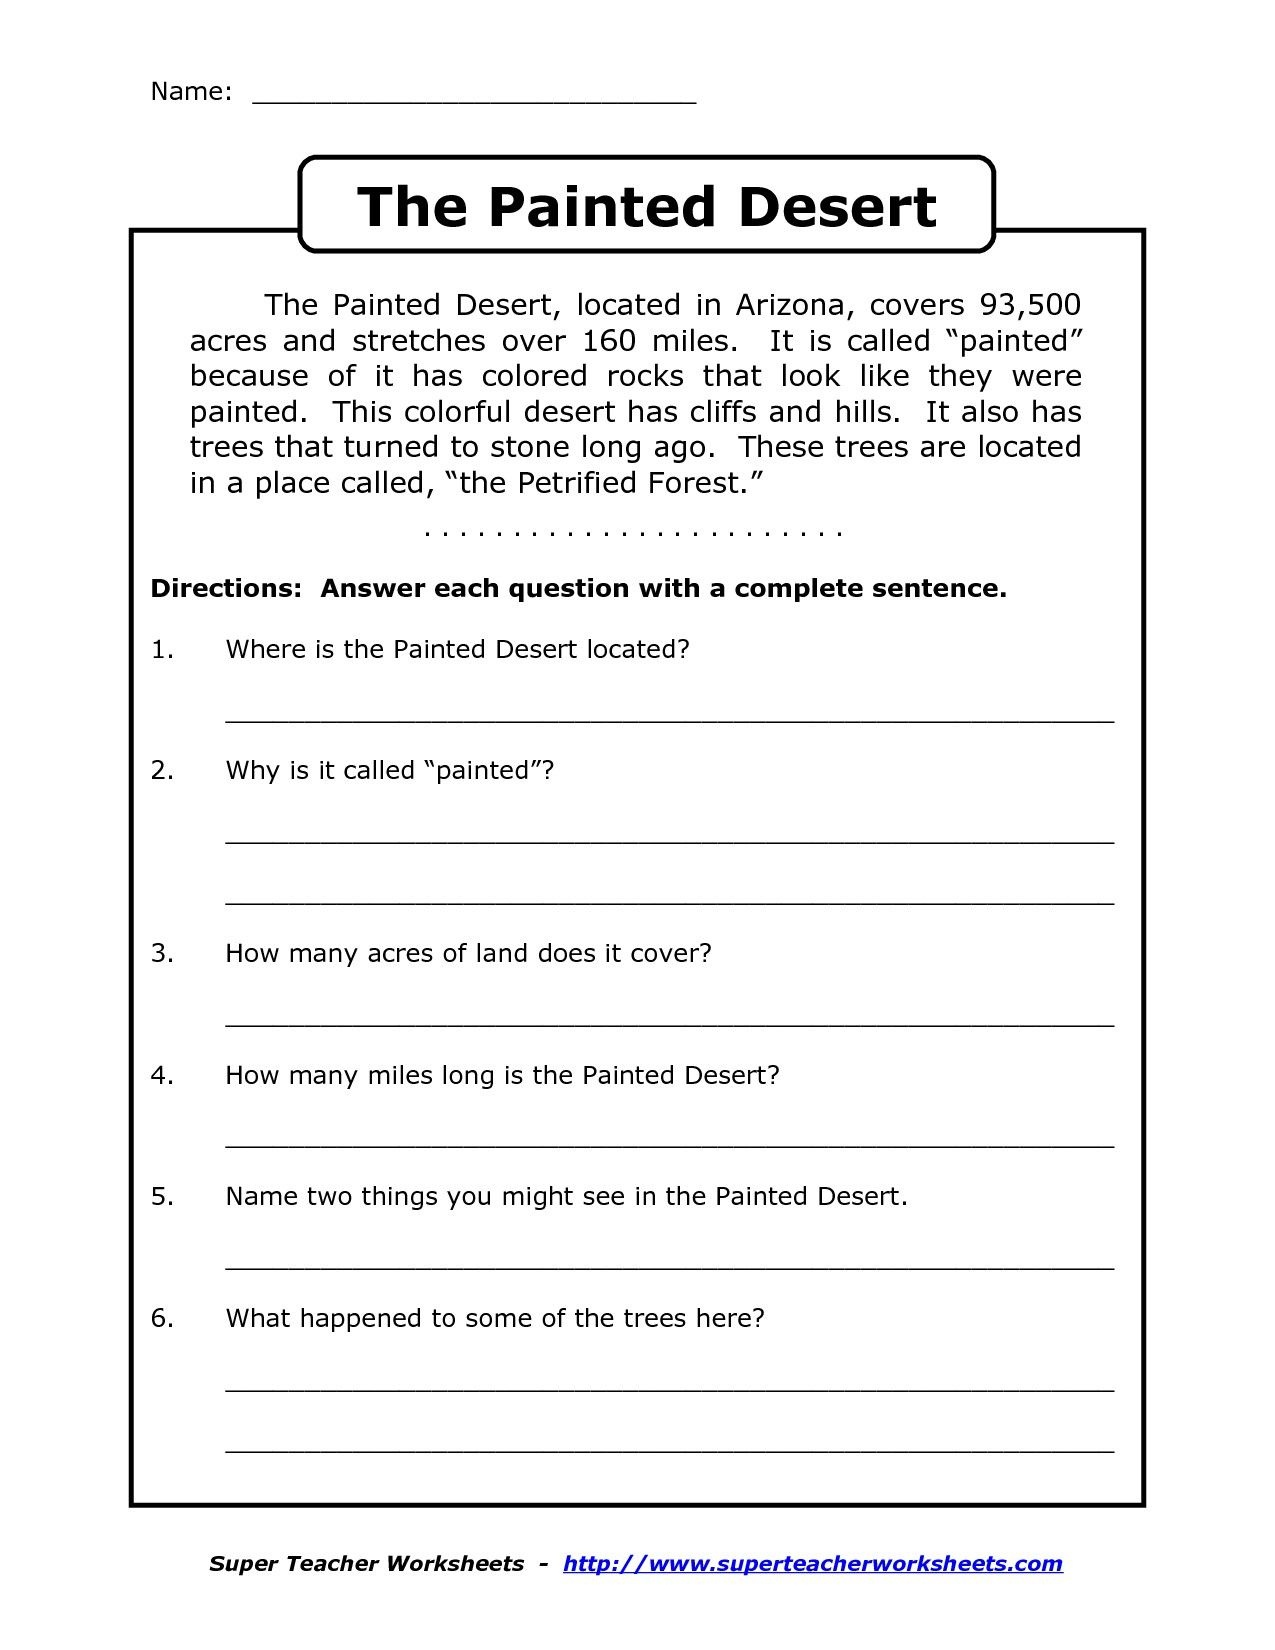 Image Result For Free Printable Worksheets For Grade 4 Comprehension - Free Printable Reading Comprehension Worksheets Grade 5